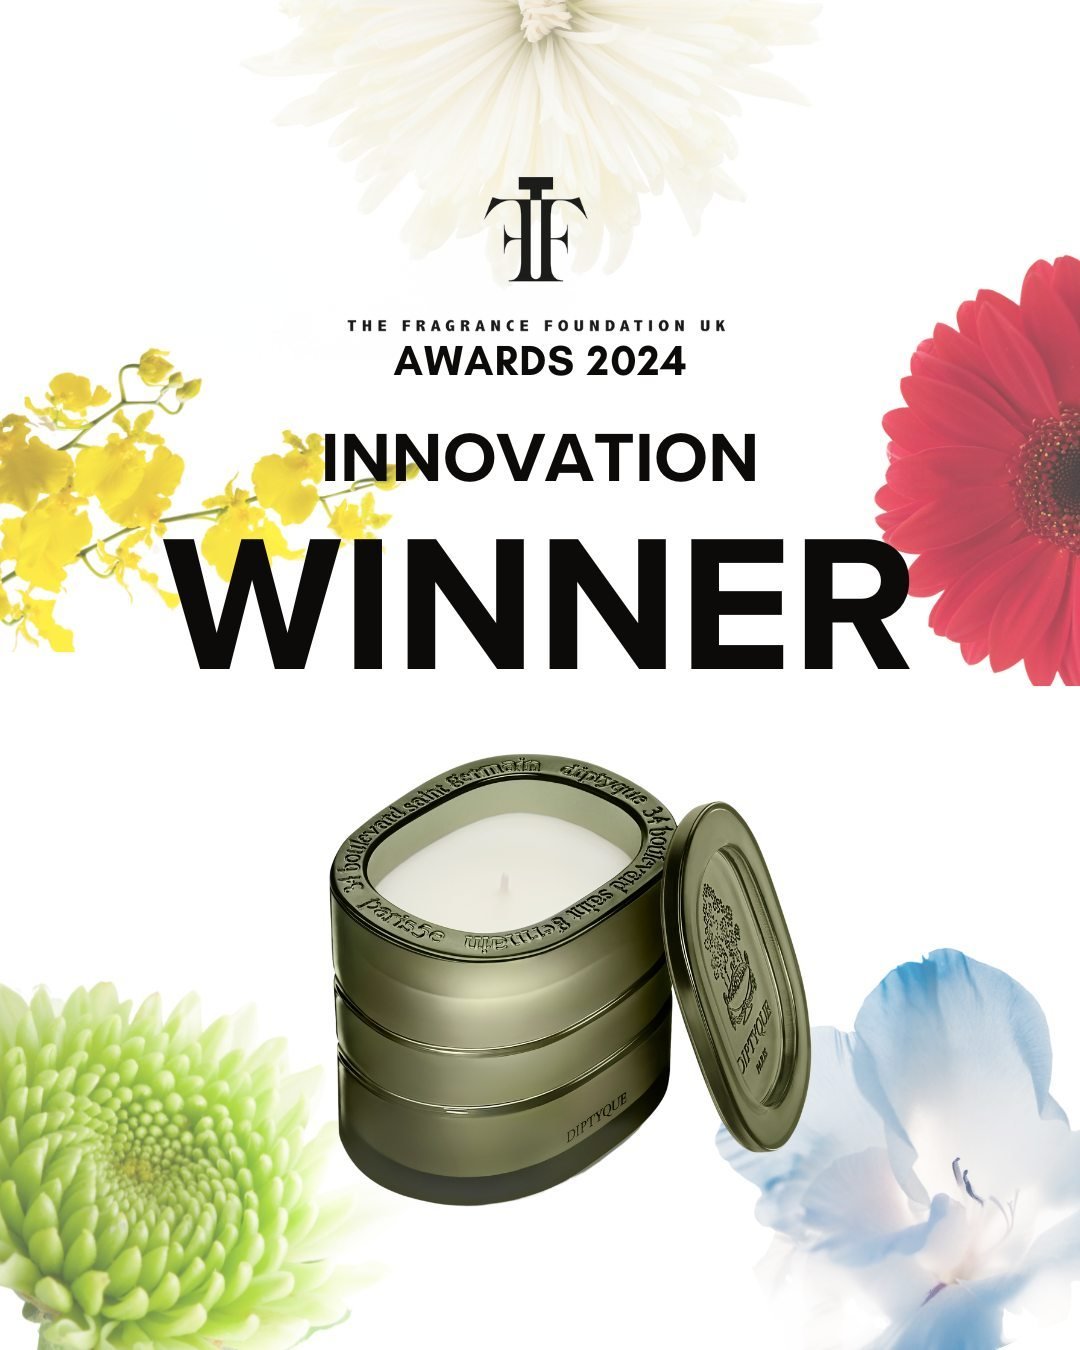 Winner of The Fragrance Foundation UK Innovation Award... 
@Diptyque &ndash; Les Mondes de Diptyque! Congratulations!

#TFFAwards2024 #Winner #FragranceAwards #Fragrance #FragranceLover #FragranceCelebration